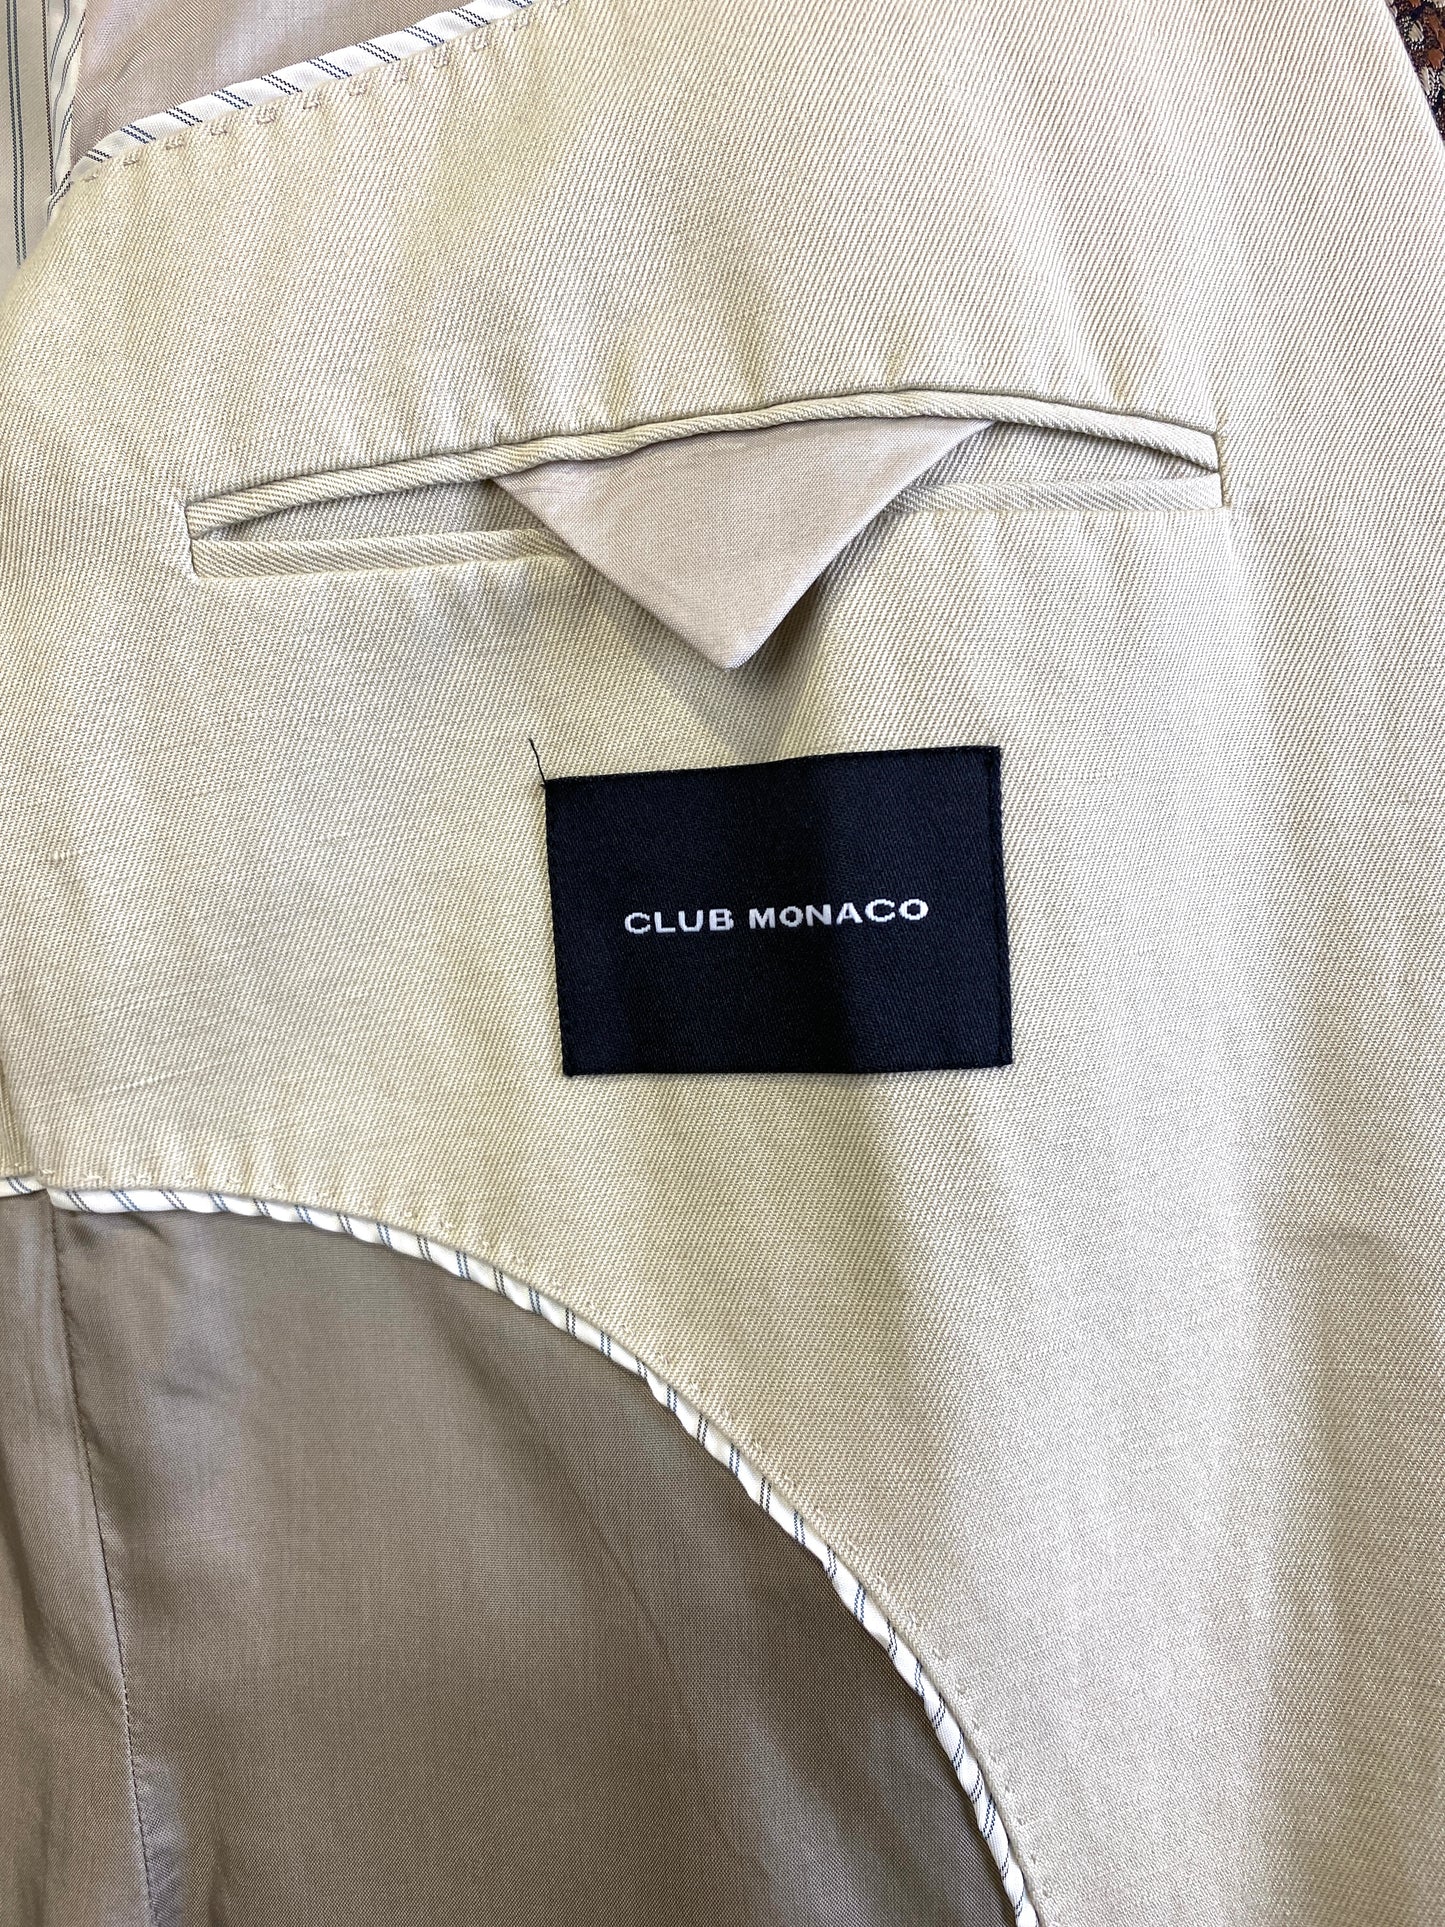 2000s Cream Men's Blazer, Club Monaco Cotton/ Linen Twill Jacket, C40